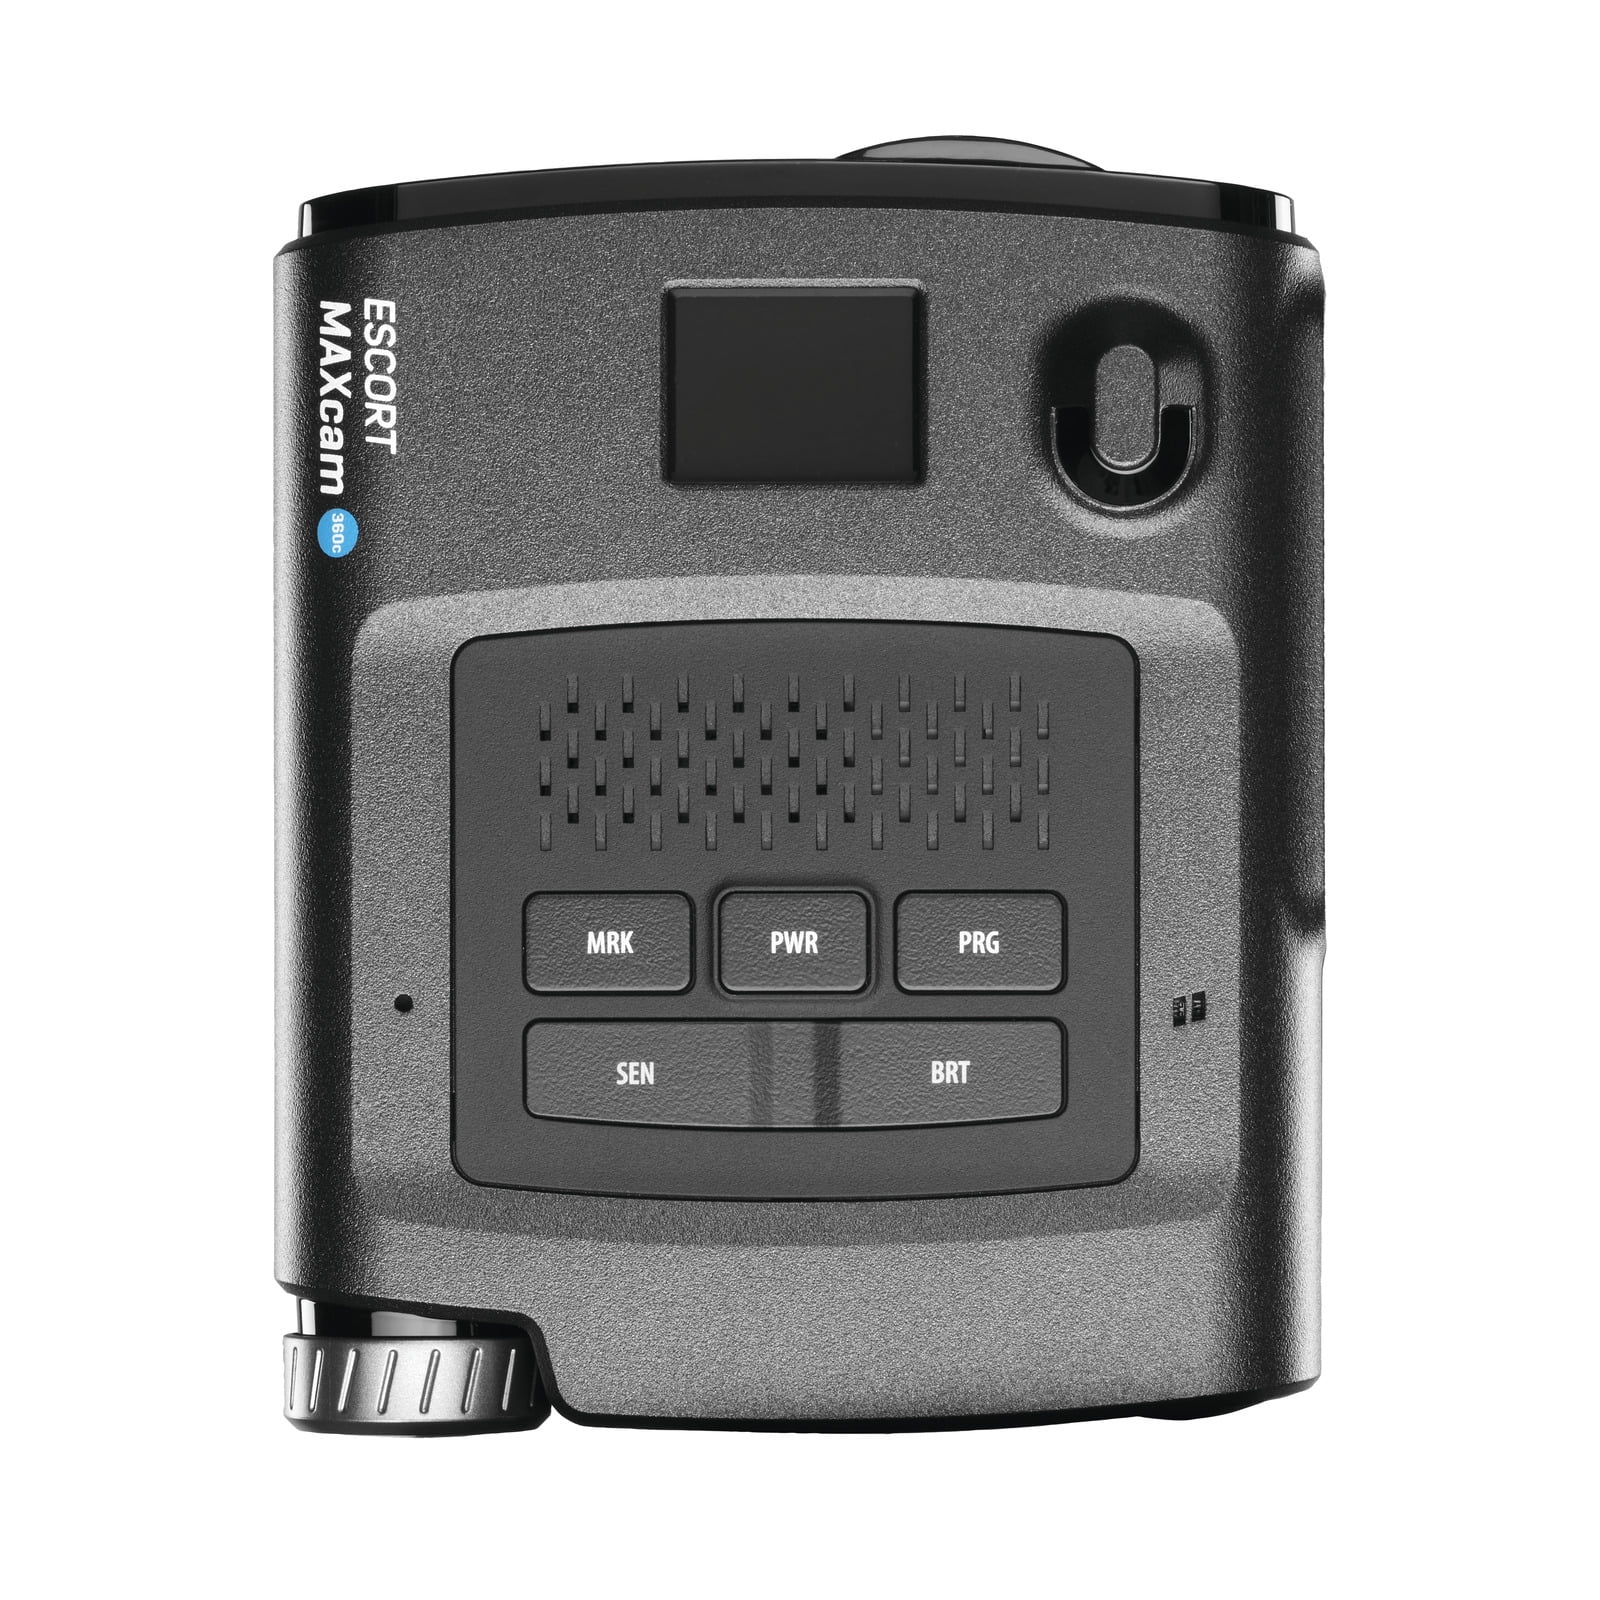 Escort MAXcam 360c Radar Detector and Dash Camera Black 0100046-1